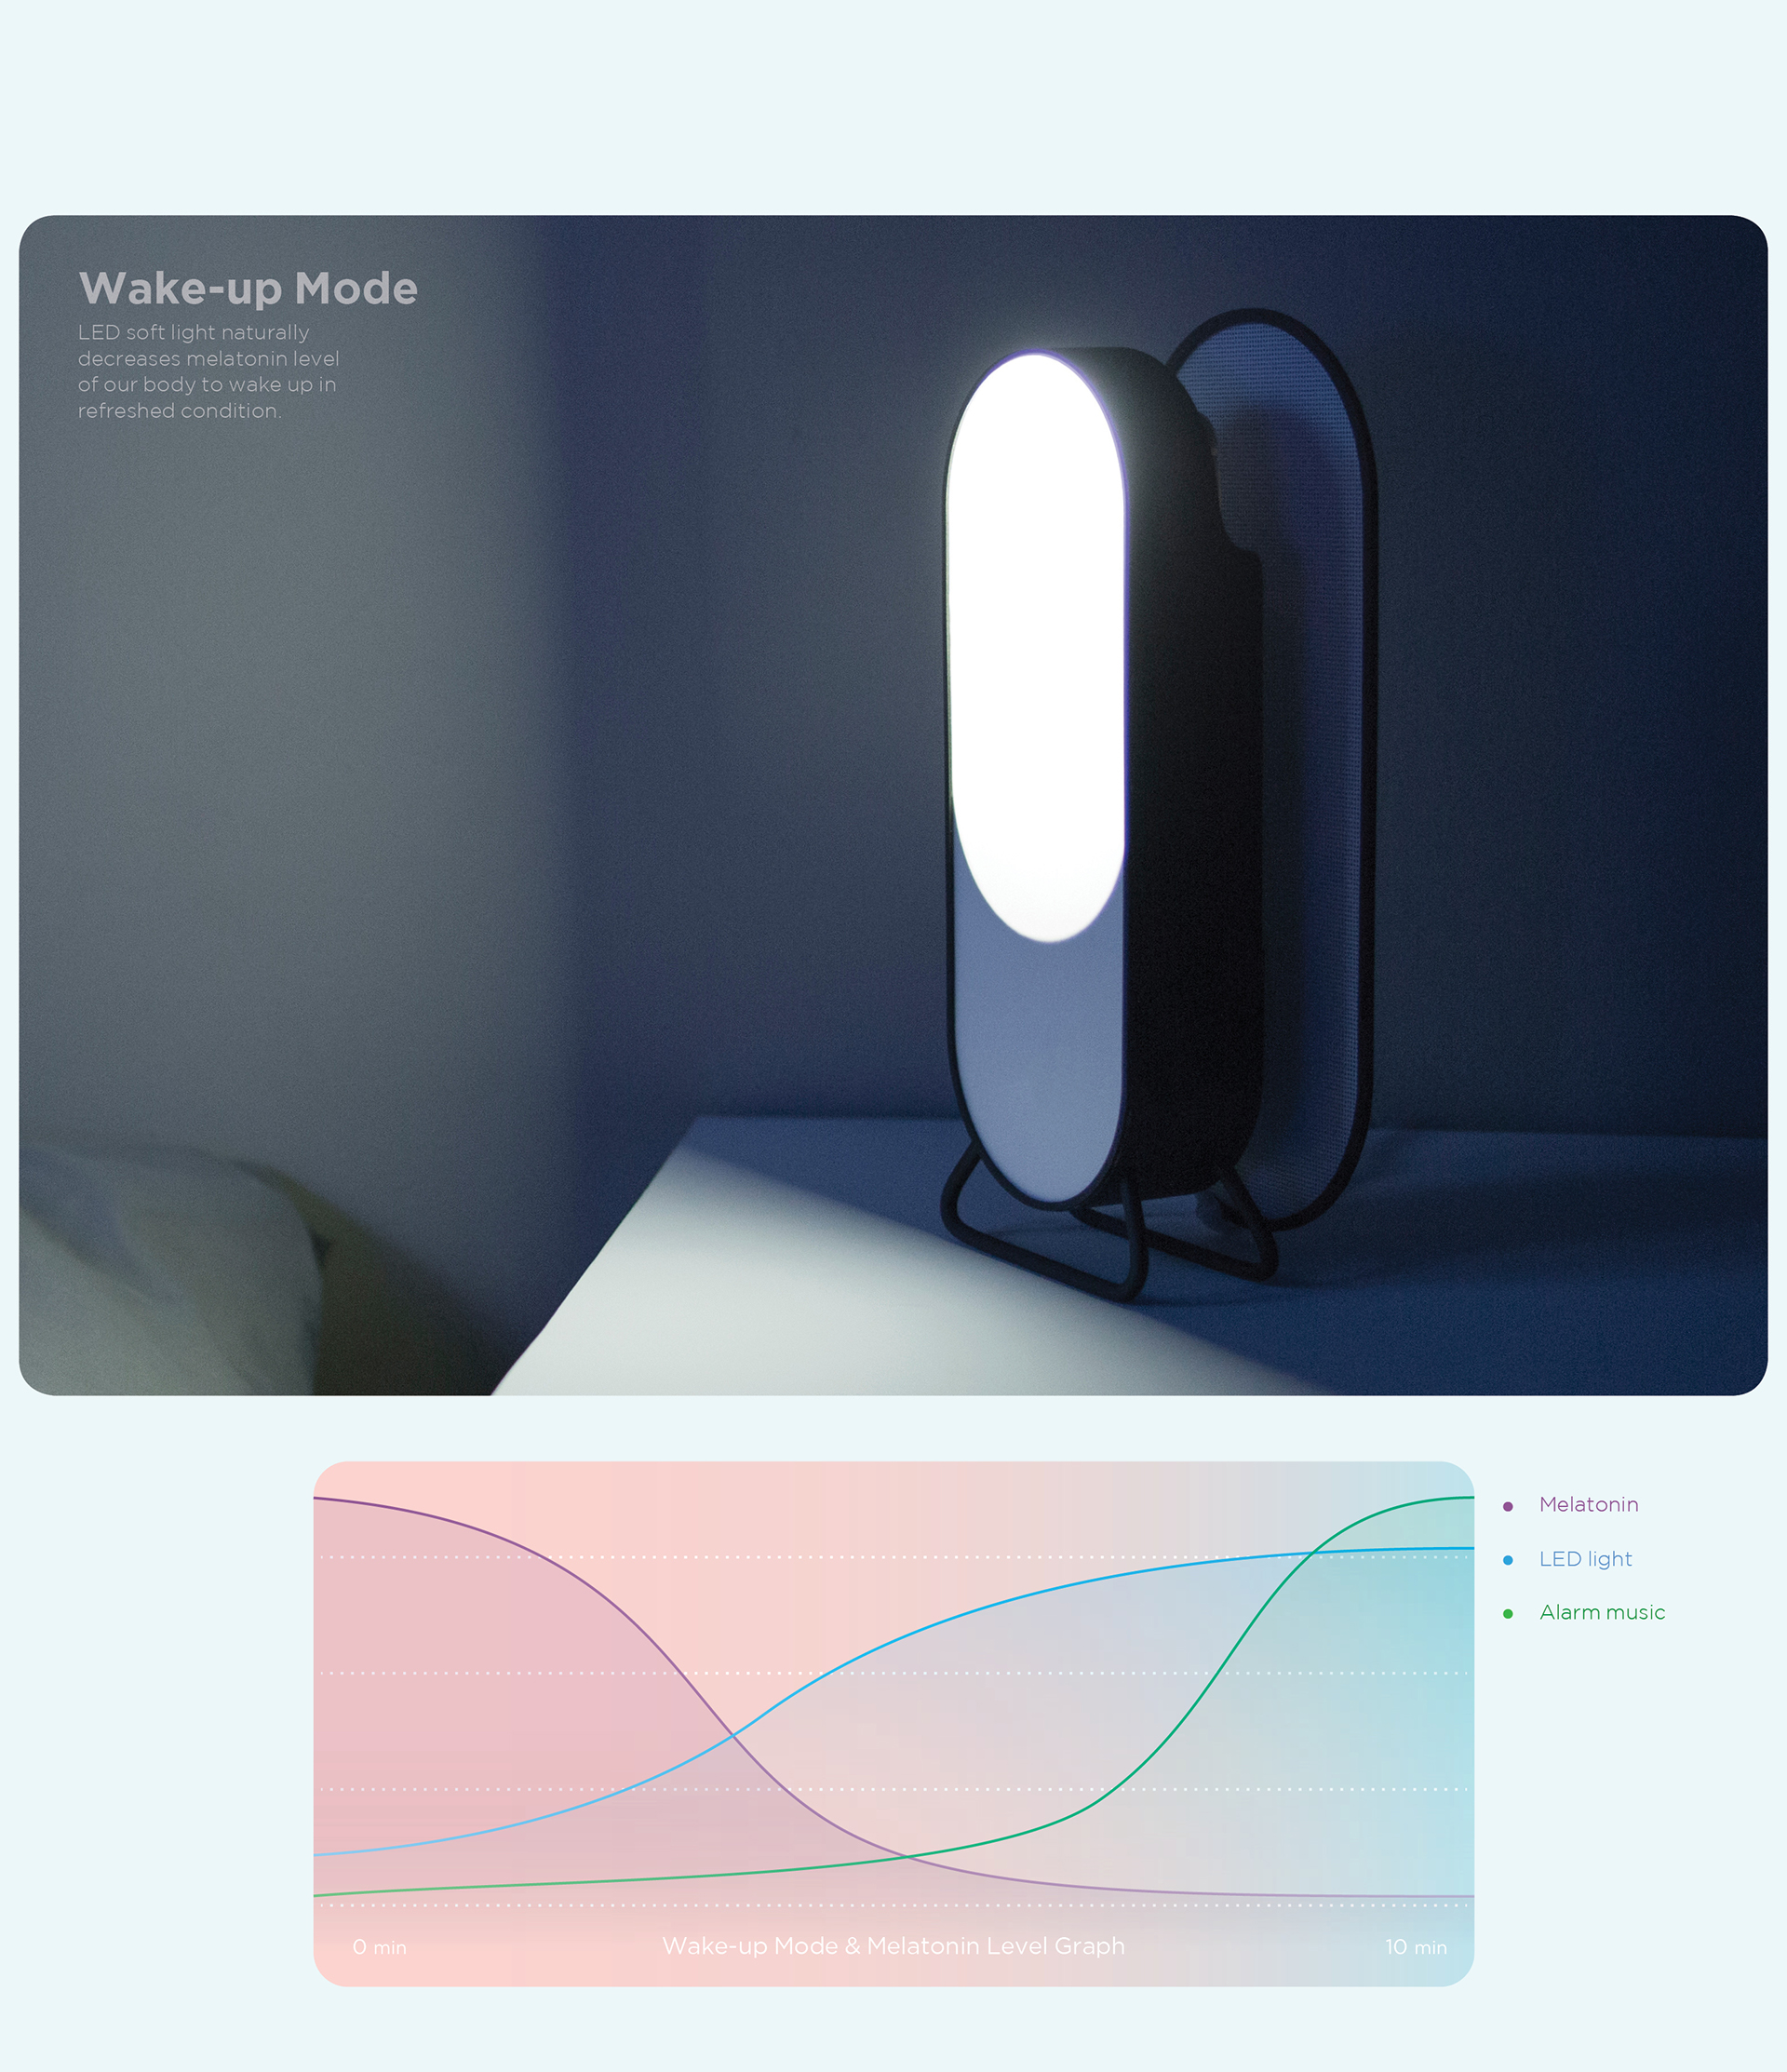 Industrial Design: MoDi - a smart sleep aid for smartphone addicts